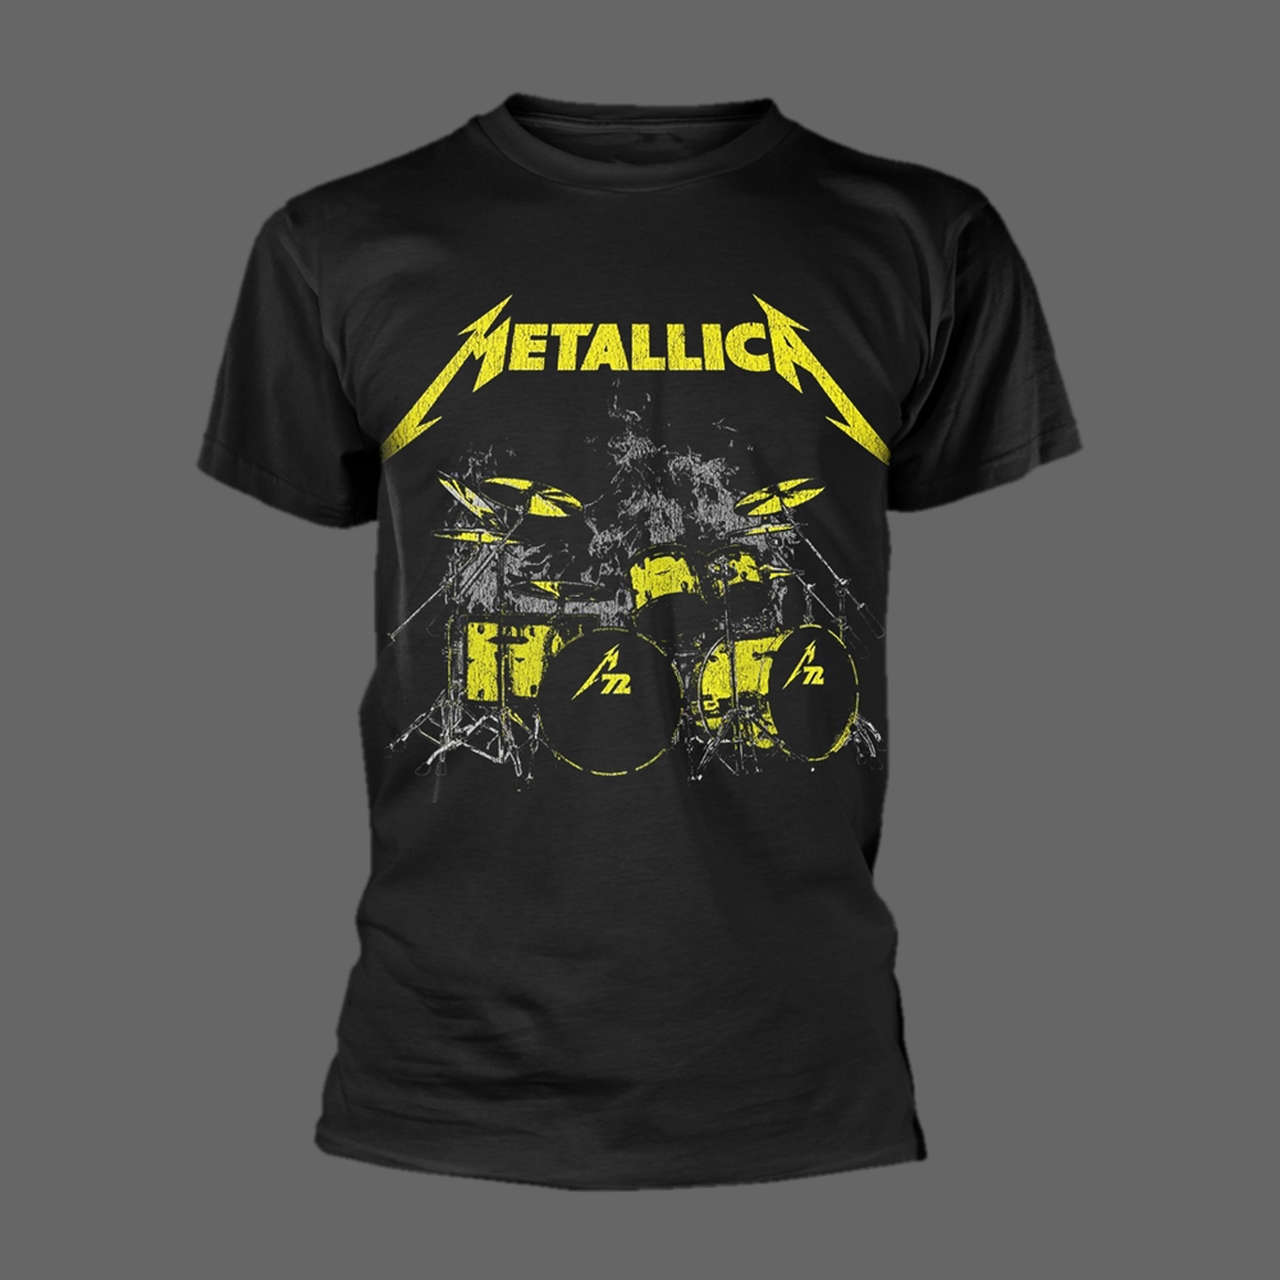 Metallica - 72 Seasons (Drum Kit) (T-Shirt)